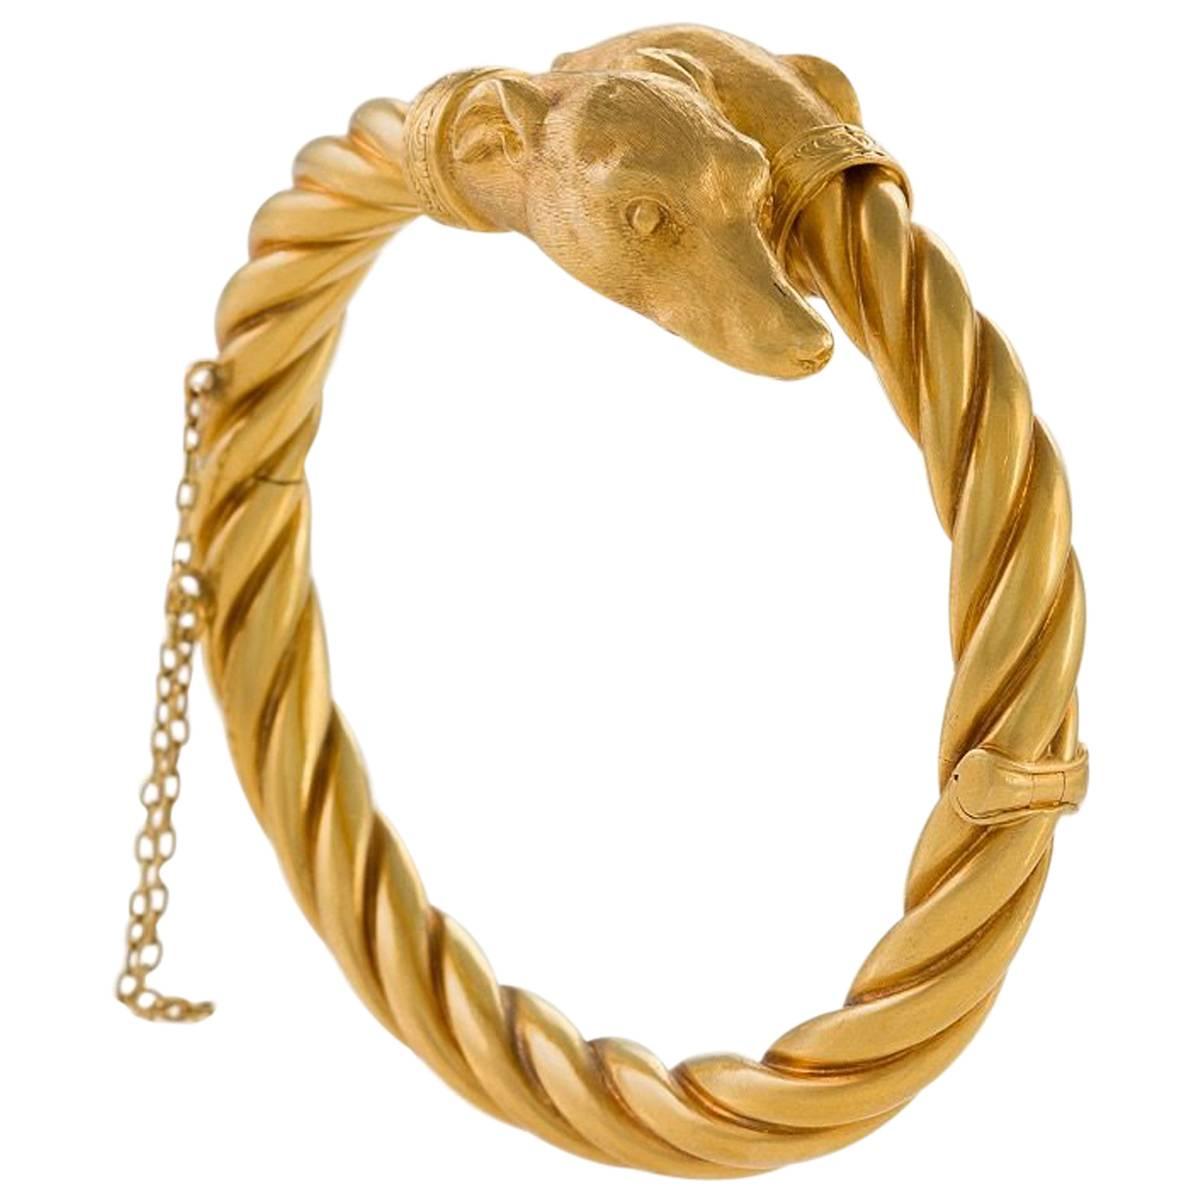 Antique Gold "Whippet" Dog Bracelet